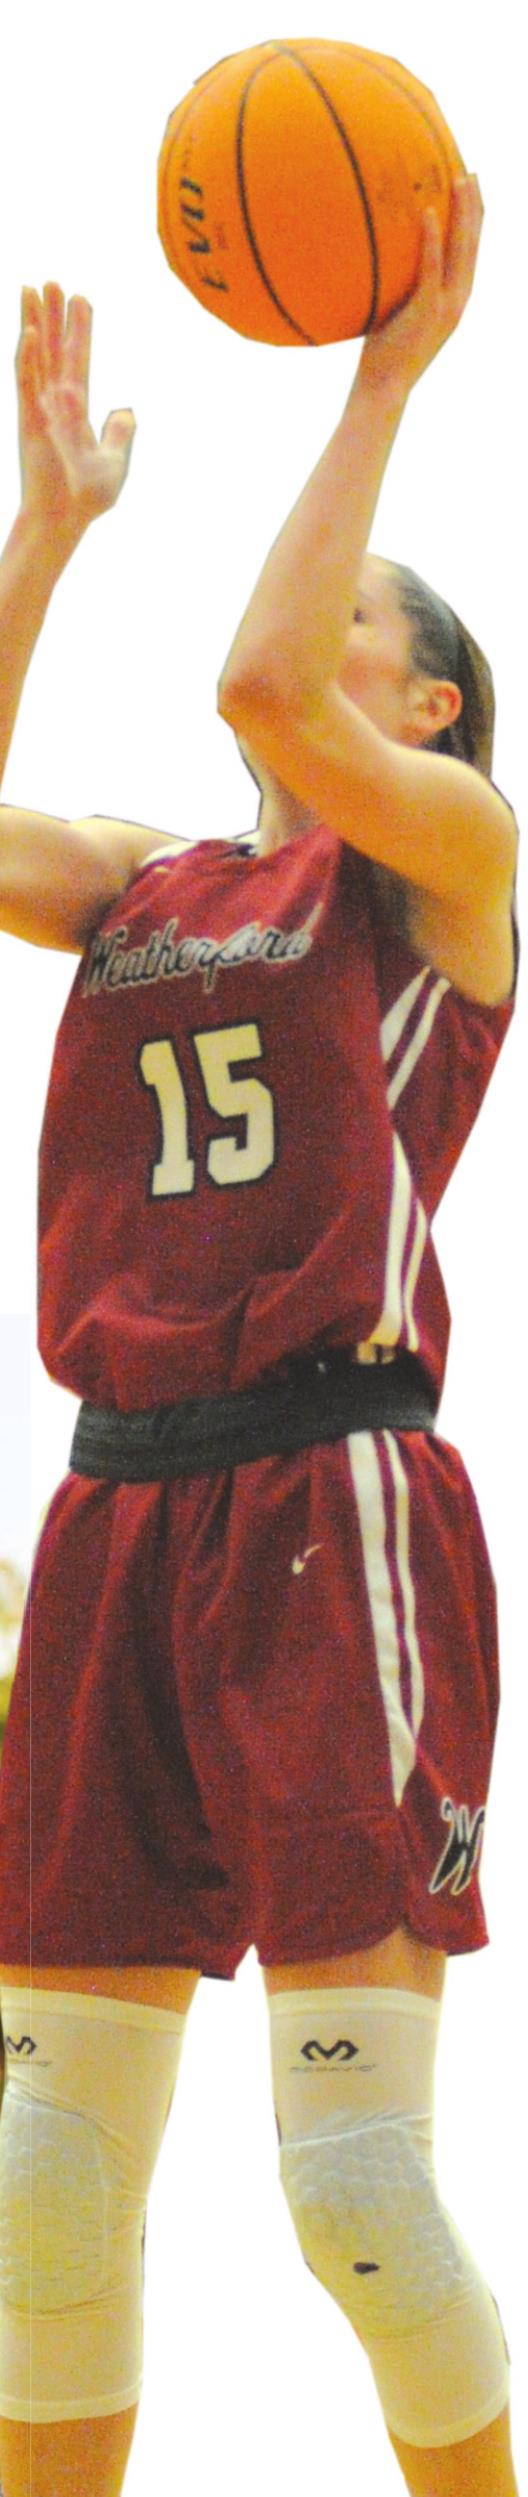 Weatherford High School senior Ashlyn Sage has verbally committed to play women’s basketball at the University of Arkansas next season. Josh Burton/WDN